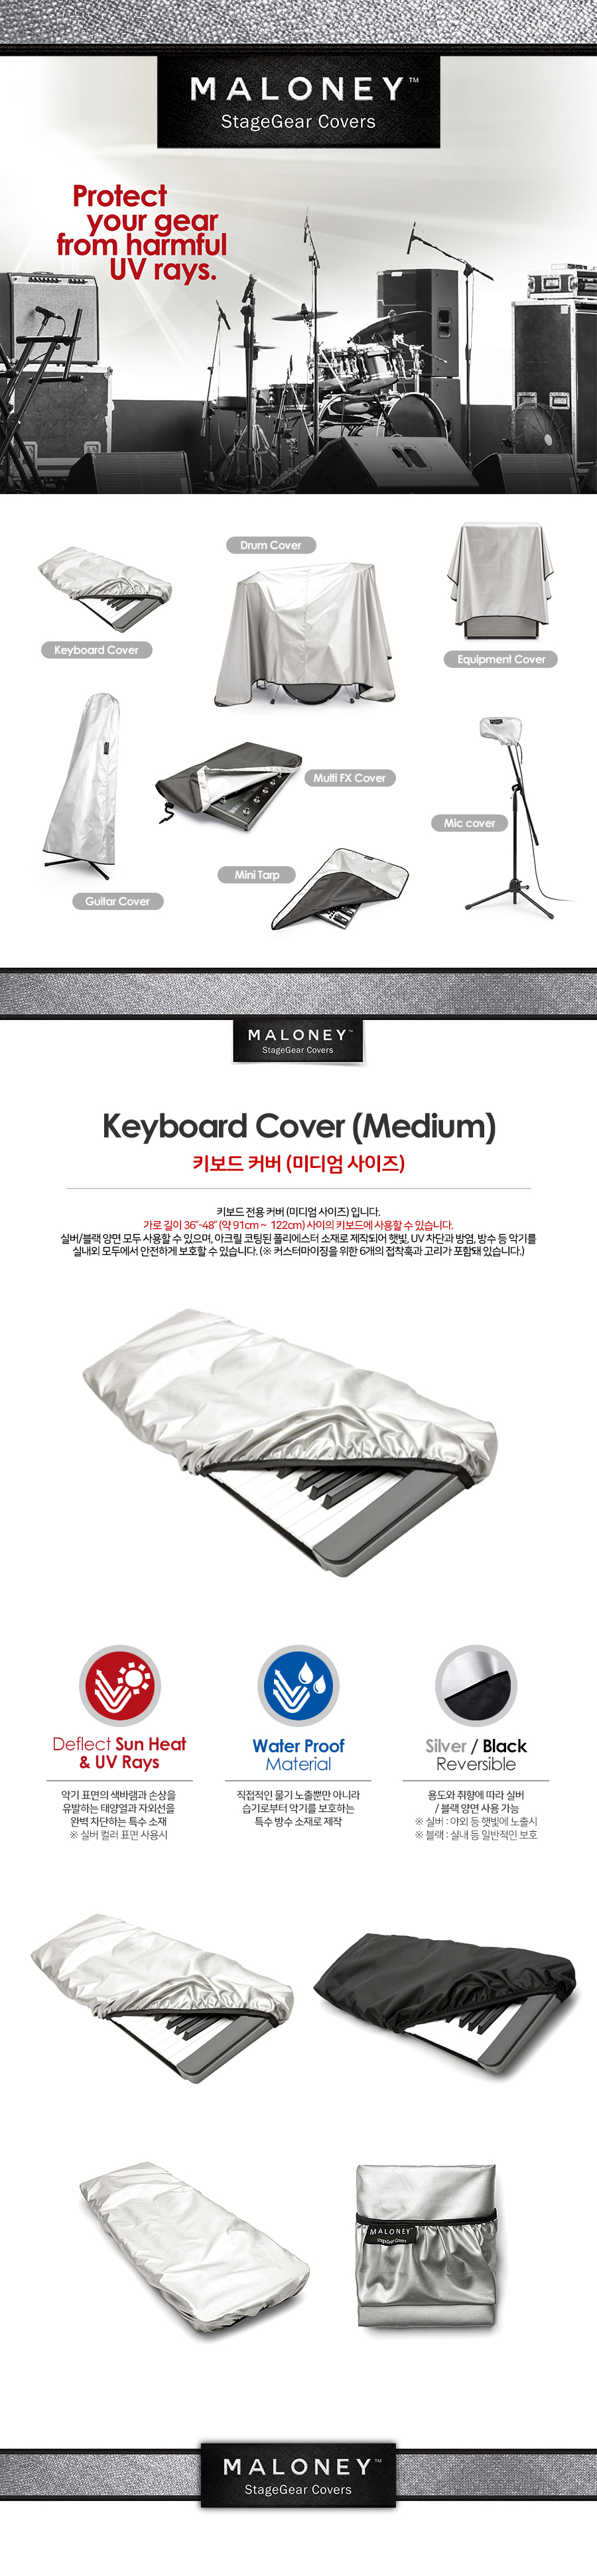 Maloney_Keyboard_Cover_Mid_D.jpg